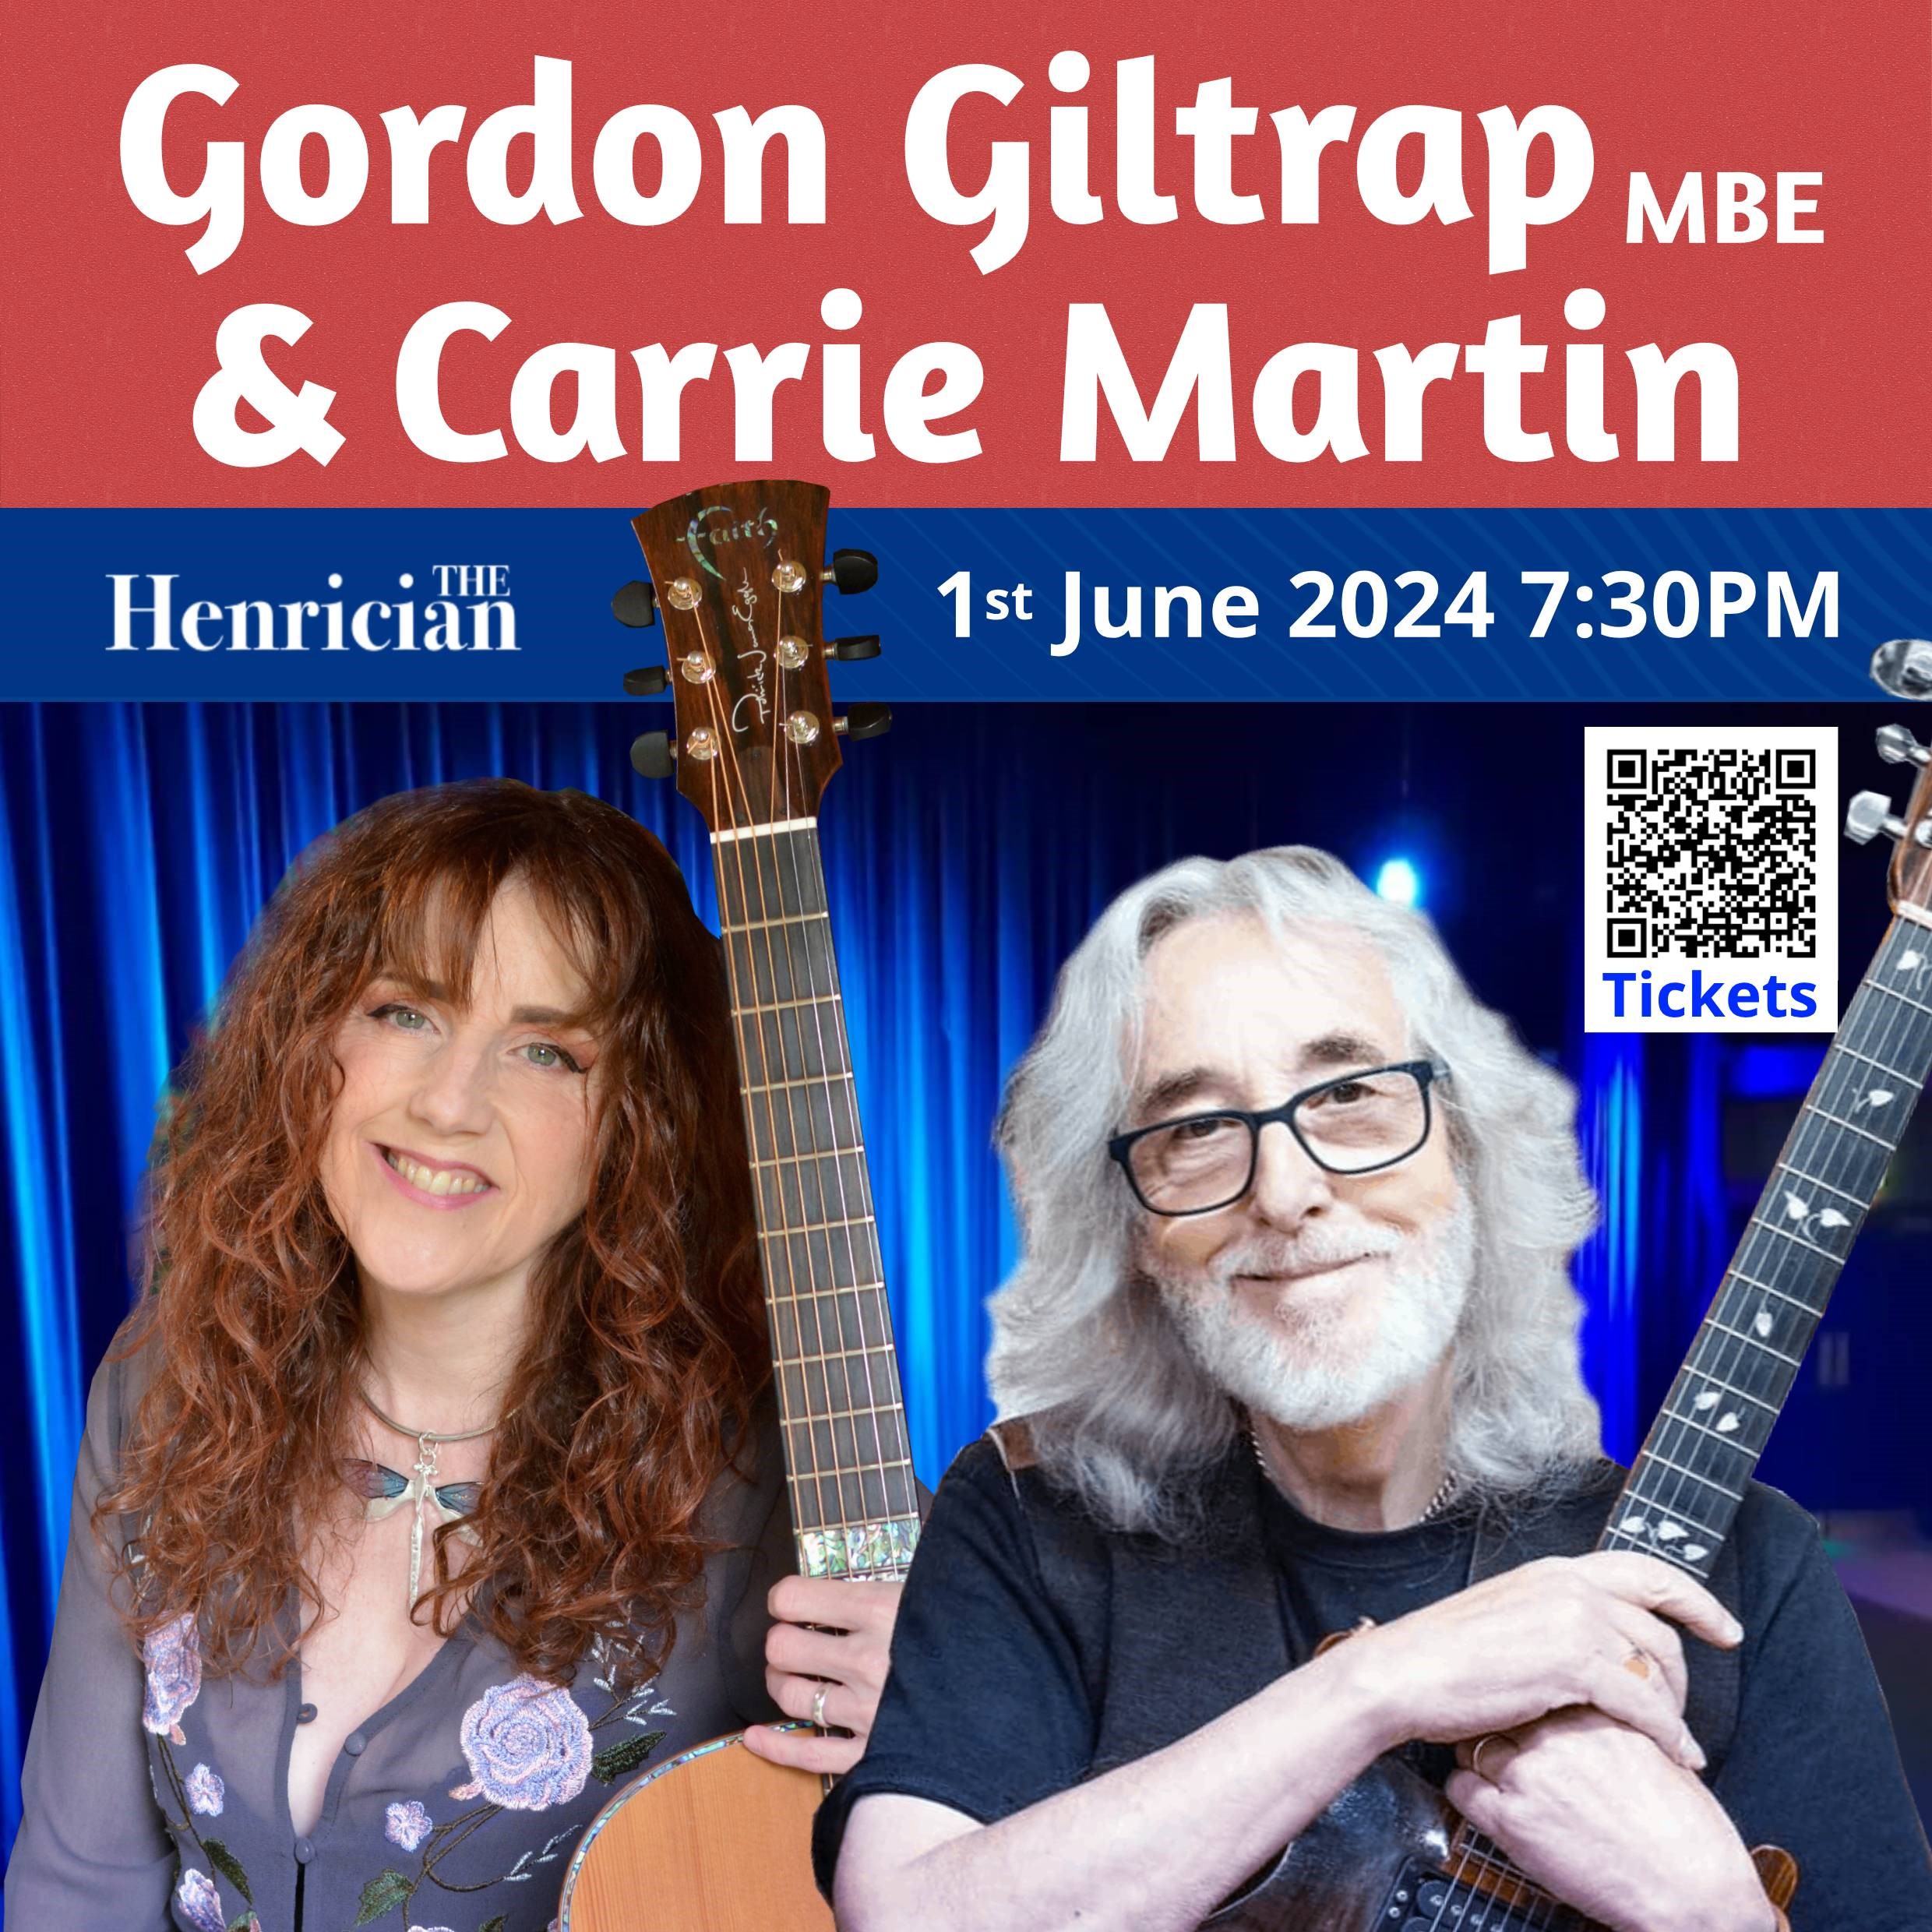 Gordon Giltrap MBE & Carrie Martin – 01 Jun 2024 – Tickets on Sale Now!